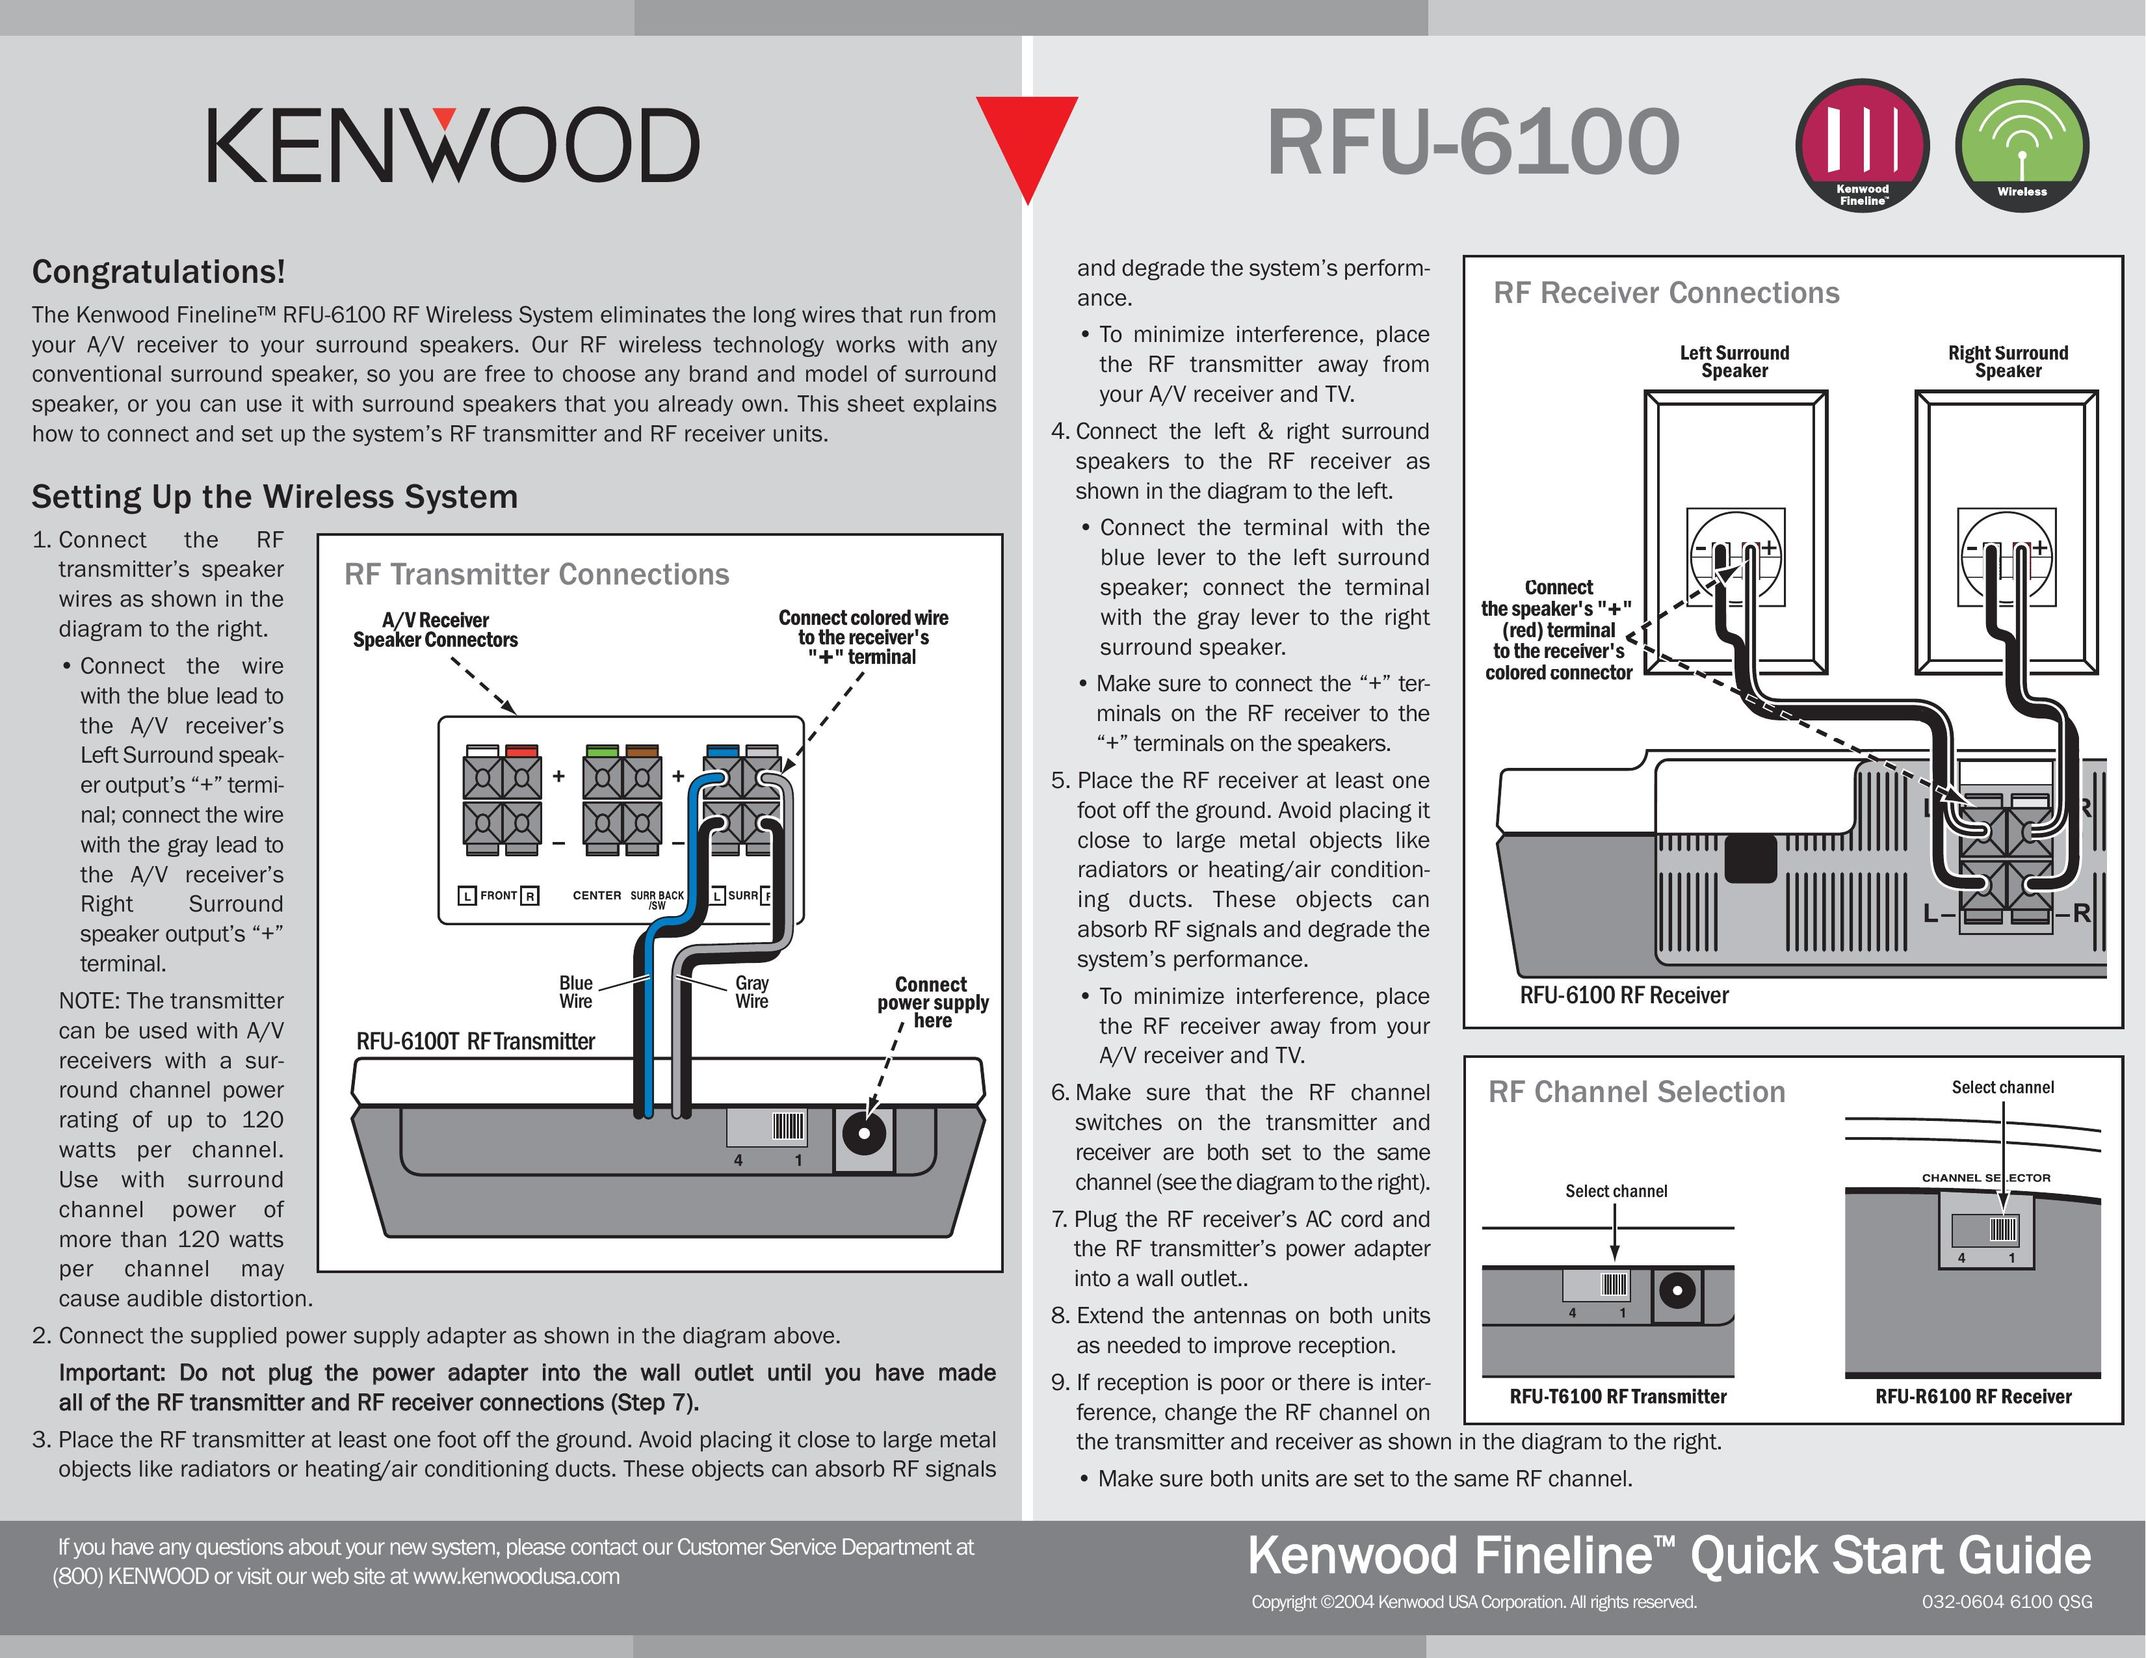 Kenwood RFU-6100 Home Theater System User Manual